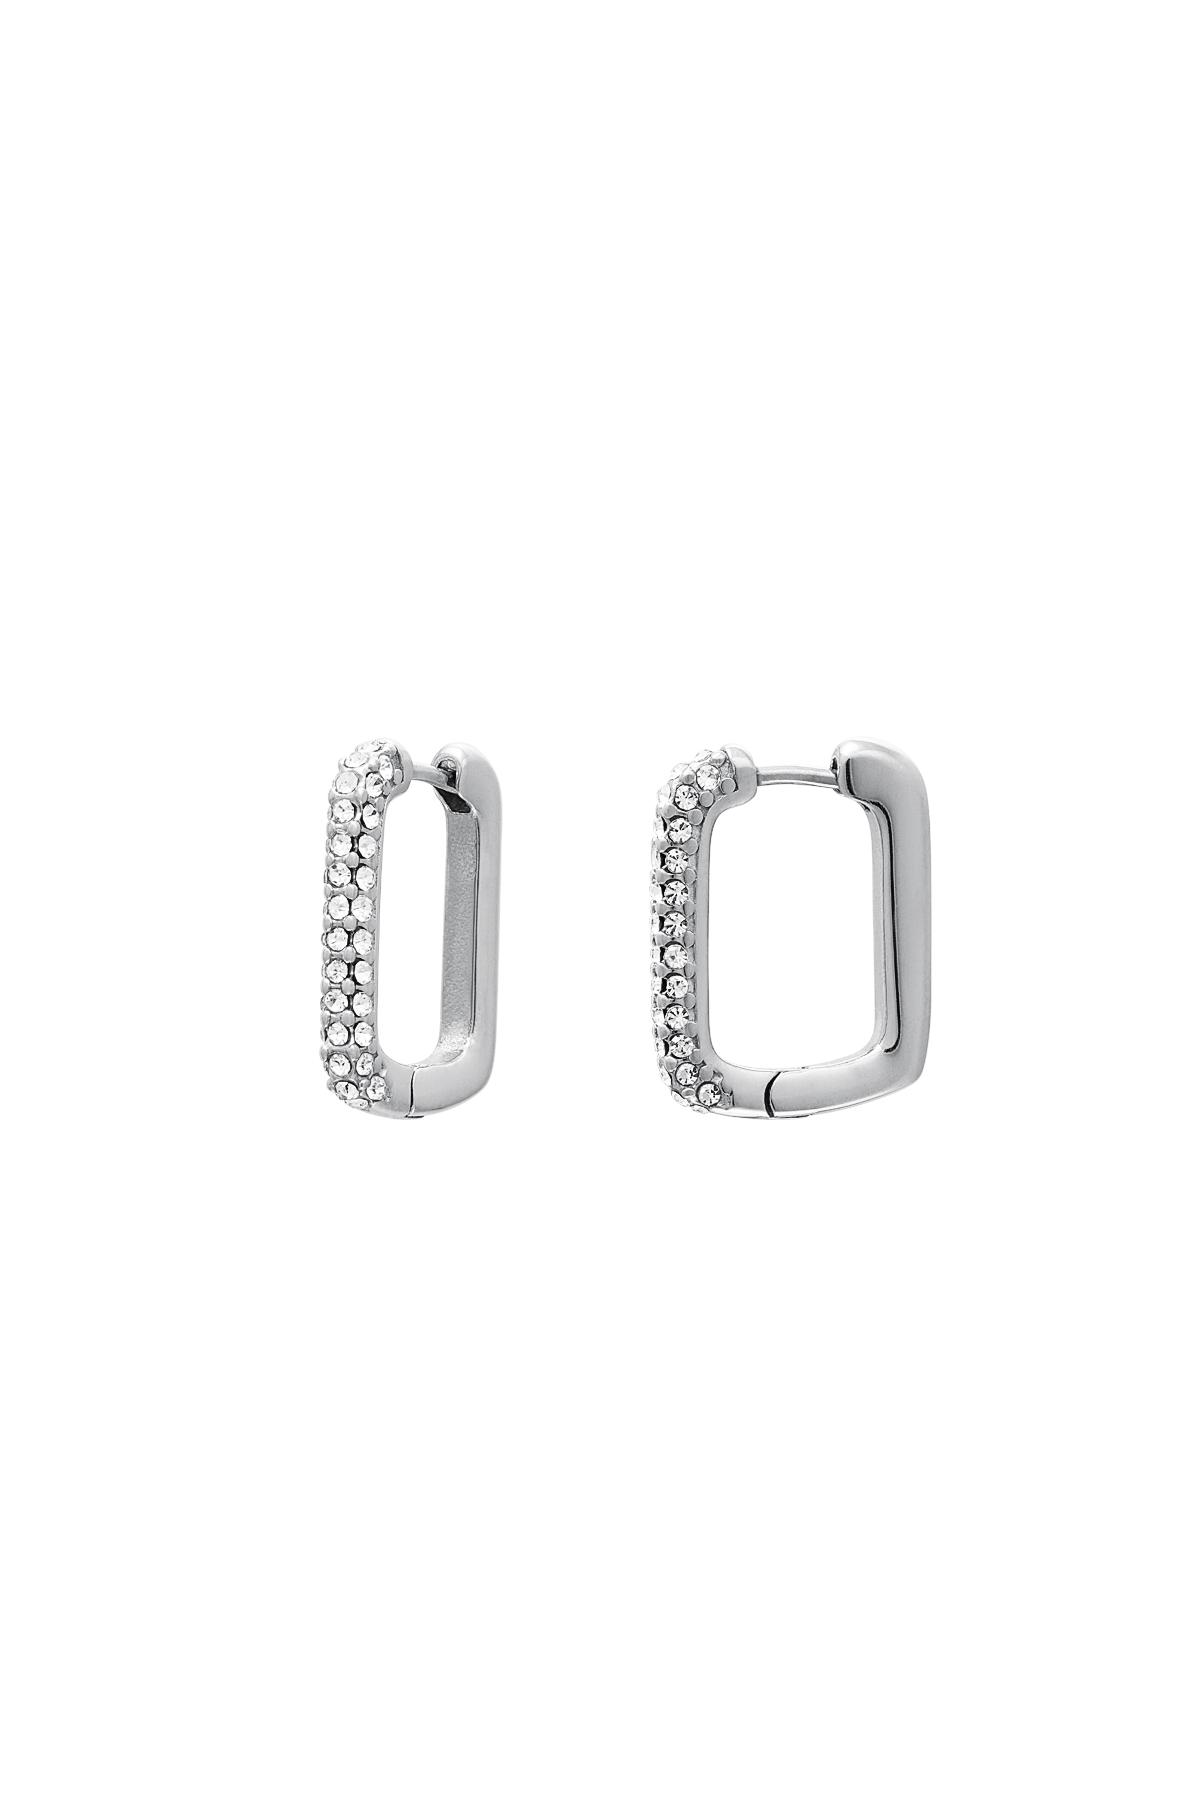 Square earrings zircon stones Silver Stainless Steel 